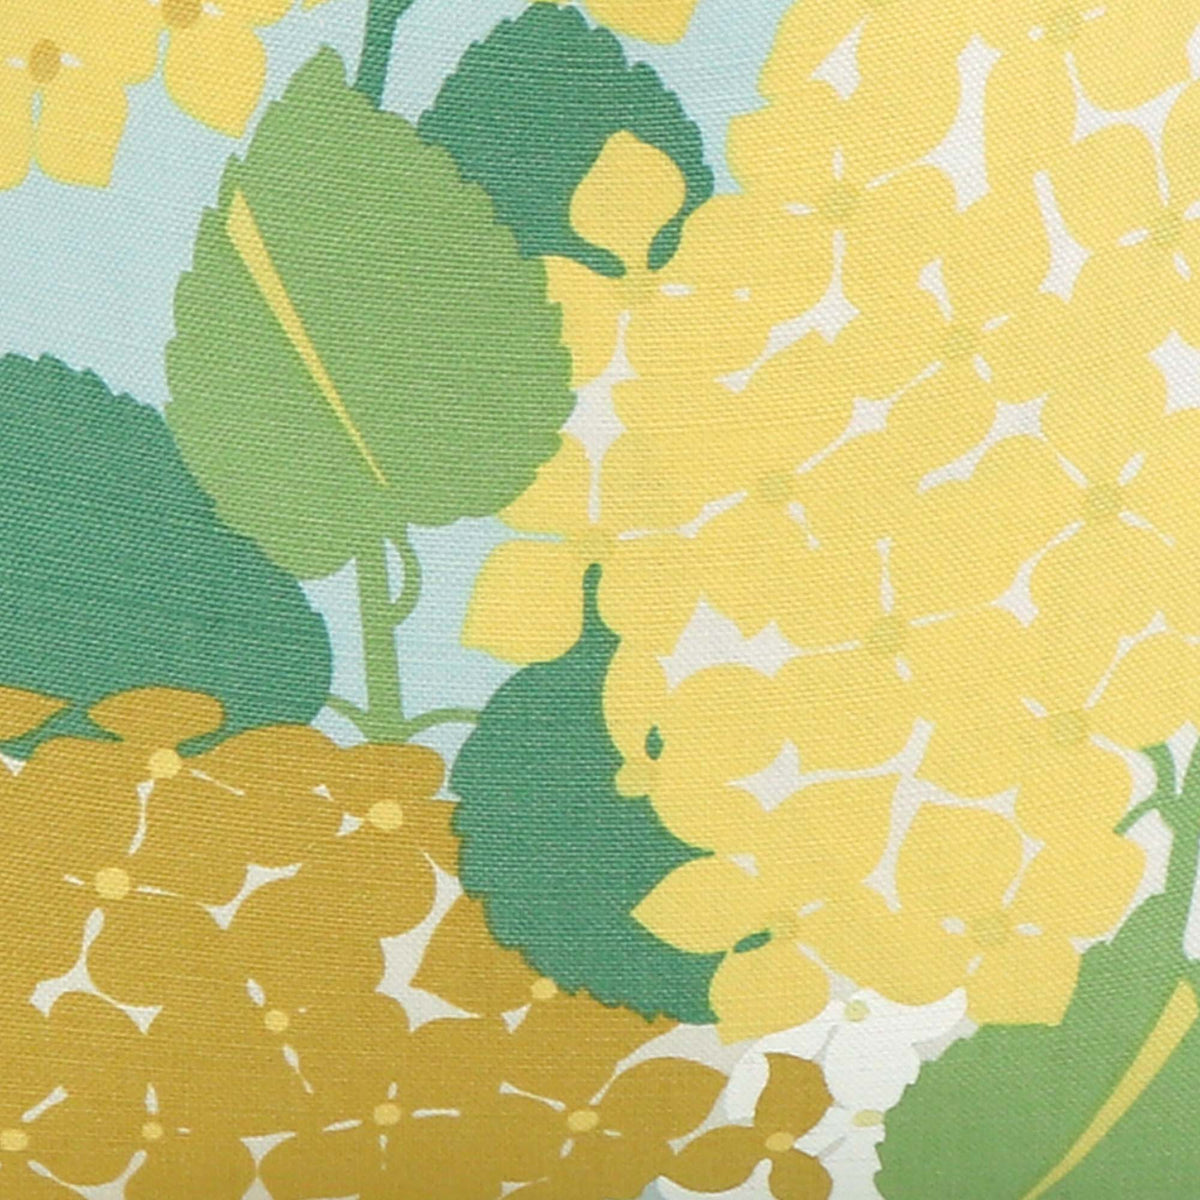 Hydrangea Yellow / 4x4 inch Fabric Swatch